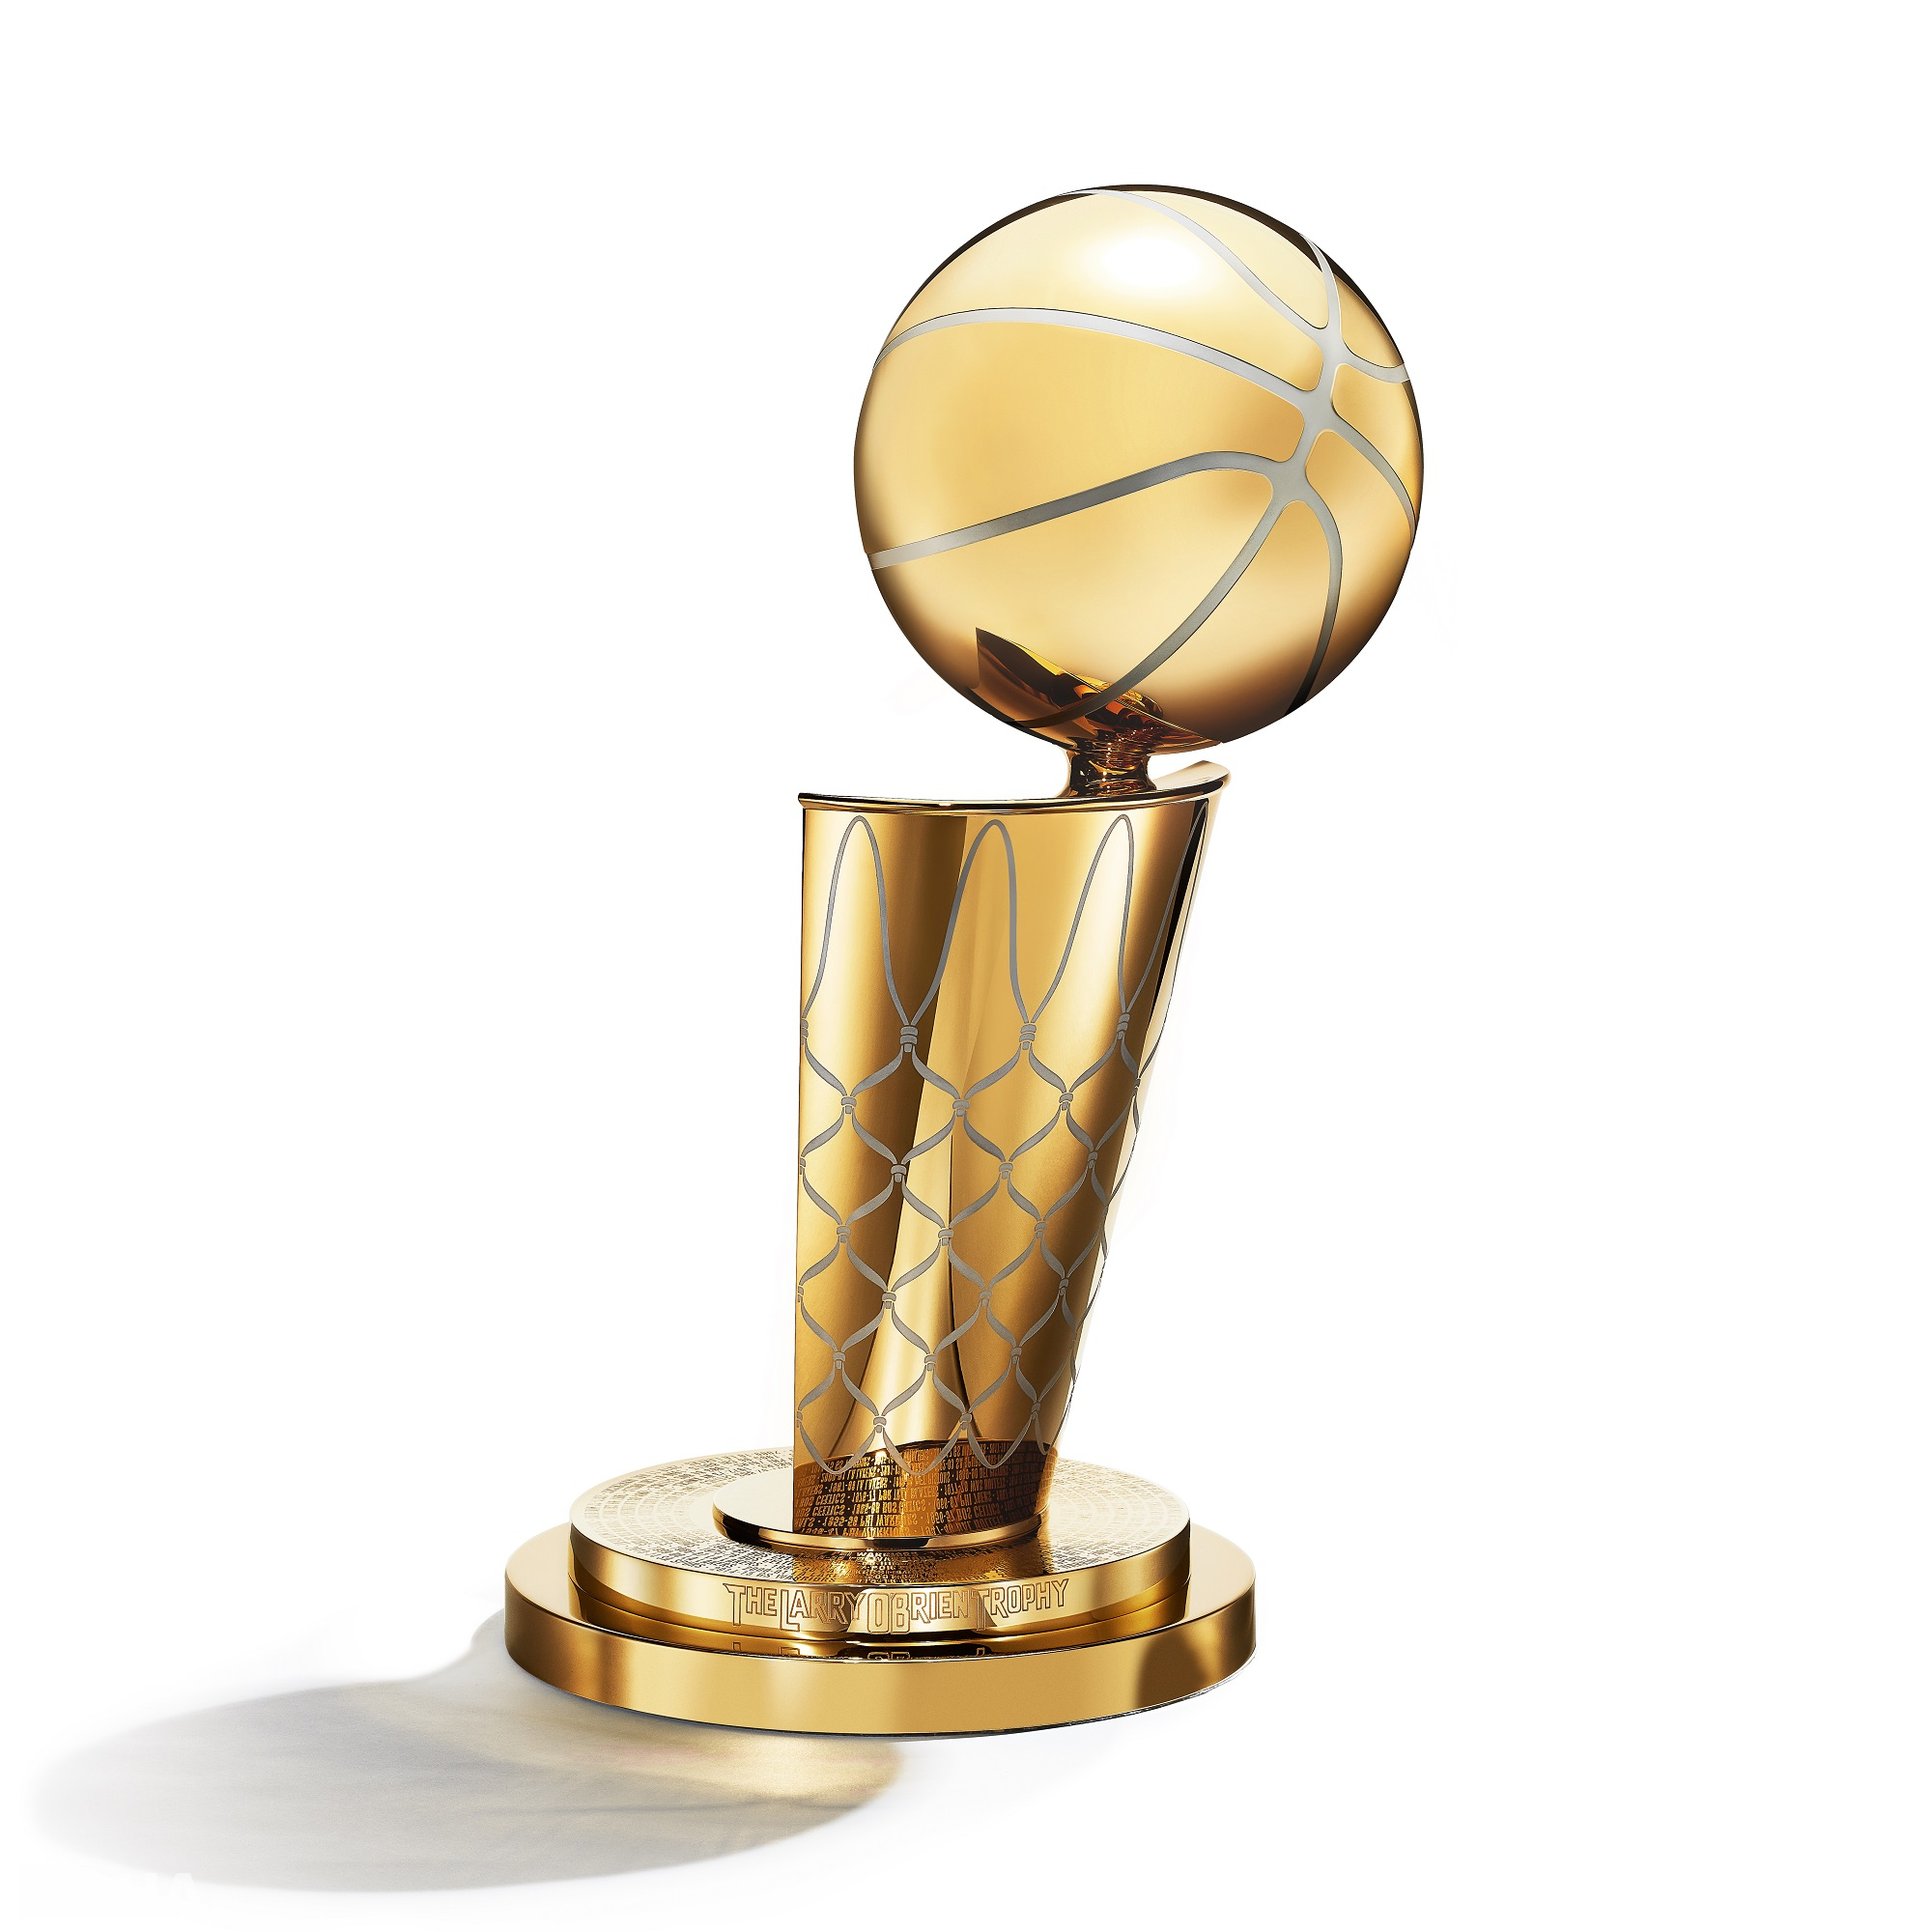 Tiffany & Co. 為NBA總決賽冠軍波士頓塞爾提克隊頒發獎盃